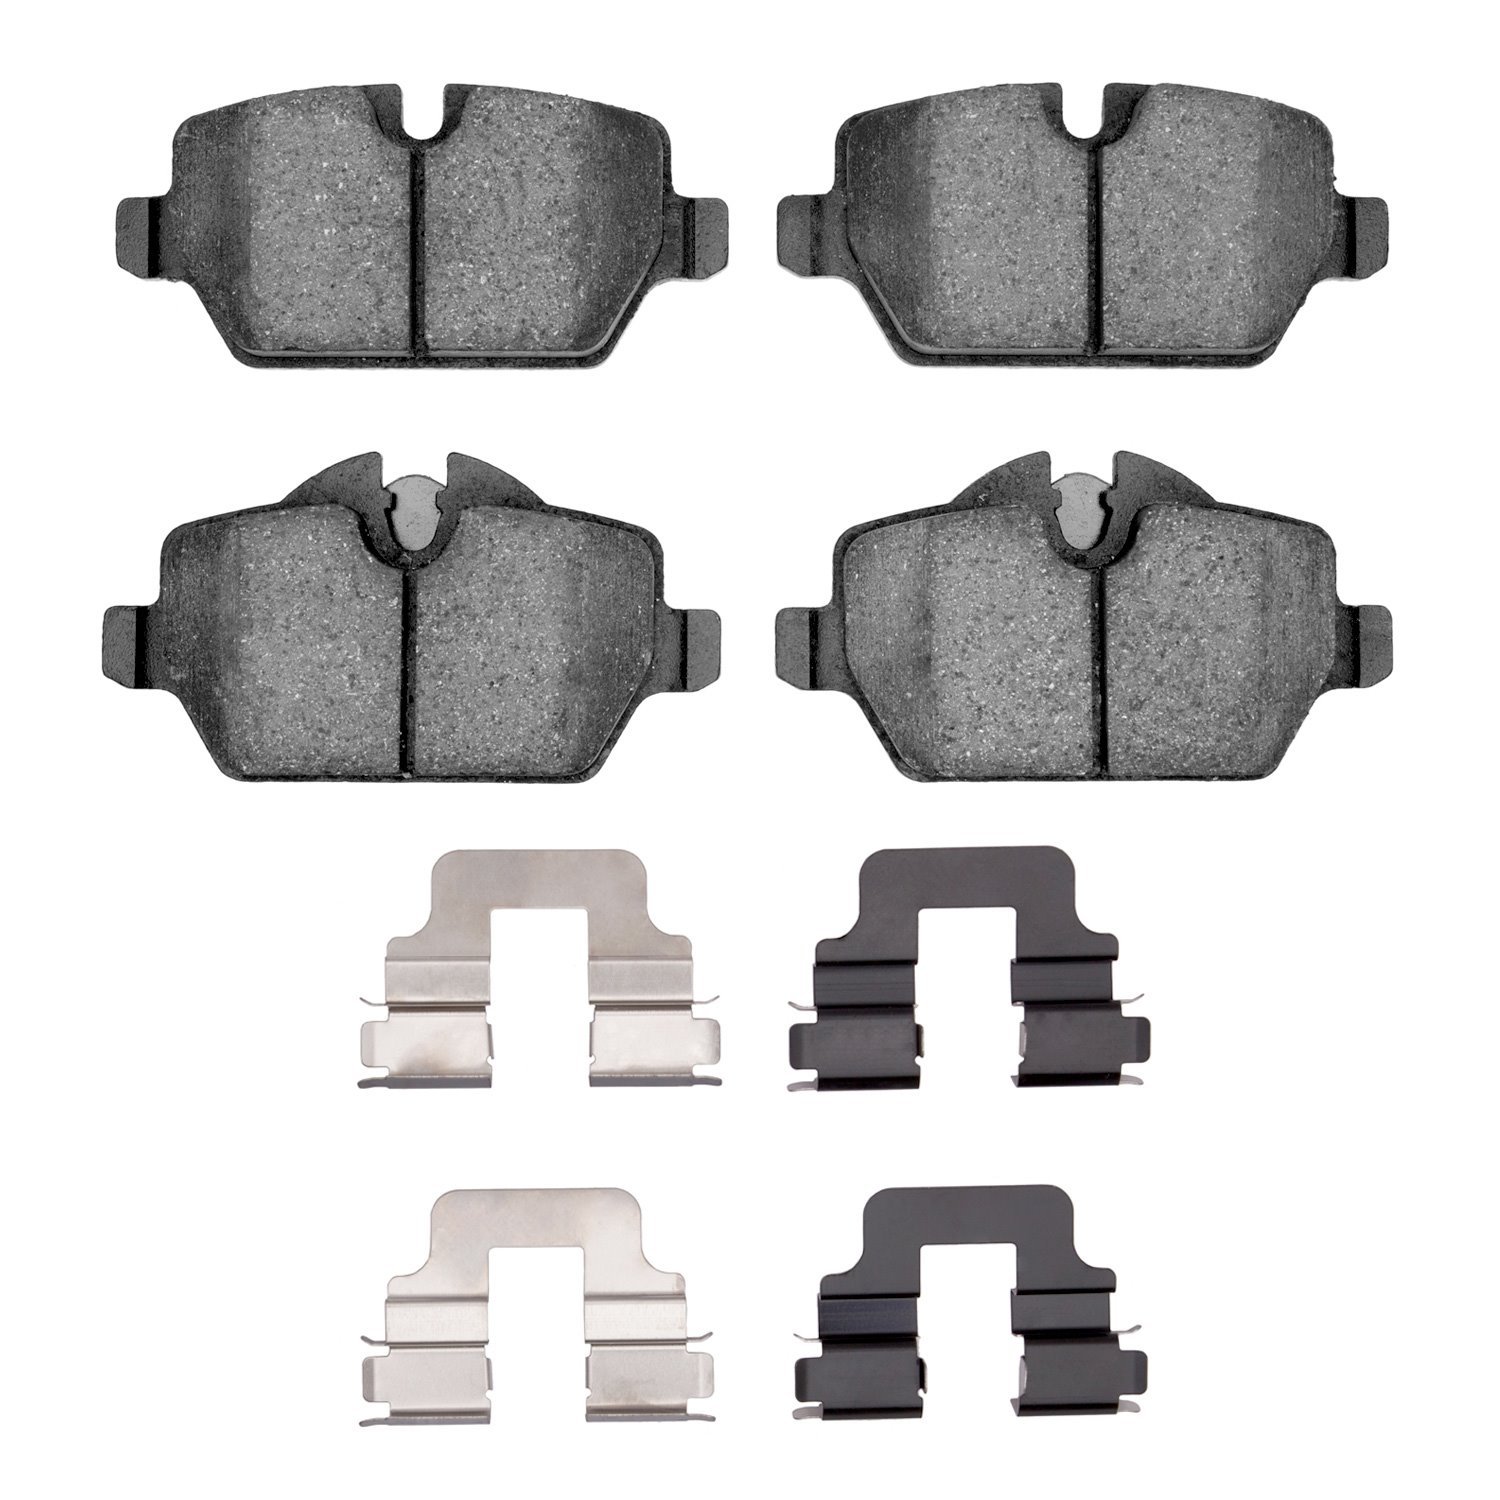 1600-1226-01 5000 Euro Ceramic Brake Pads & Hardware Kit, 2005-2016 Multiple Makes/Models, Position: Rear